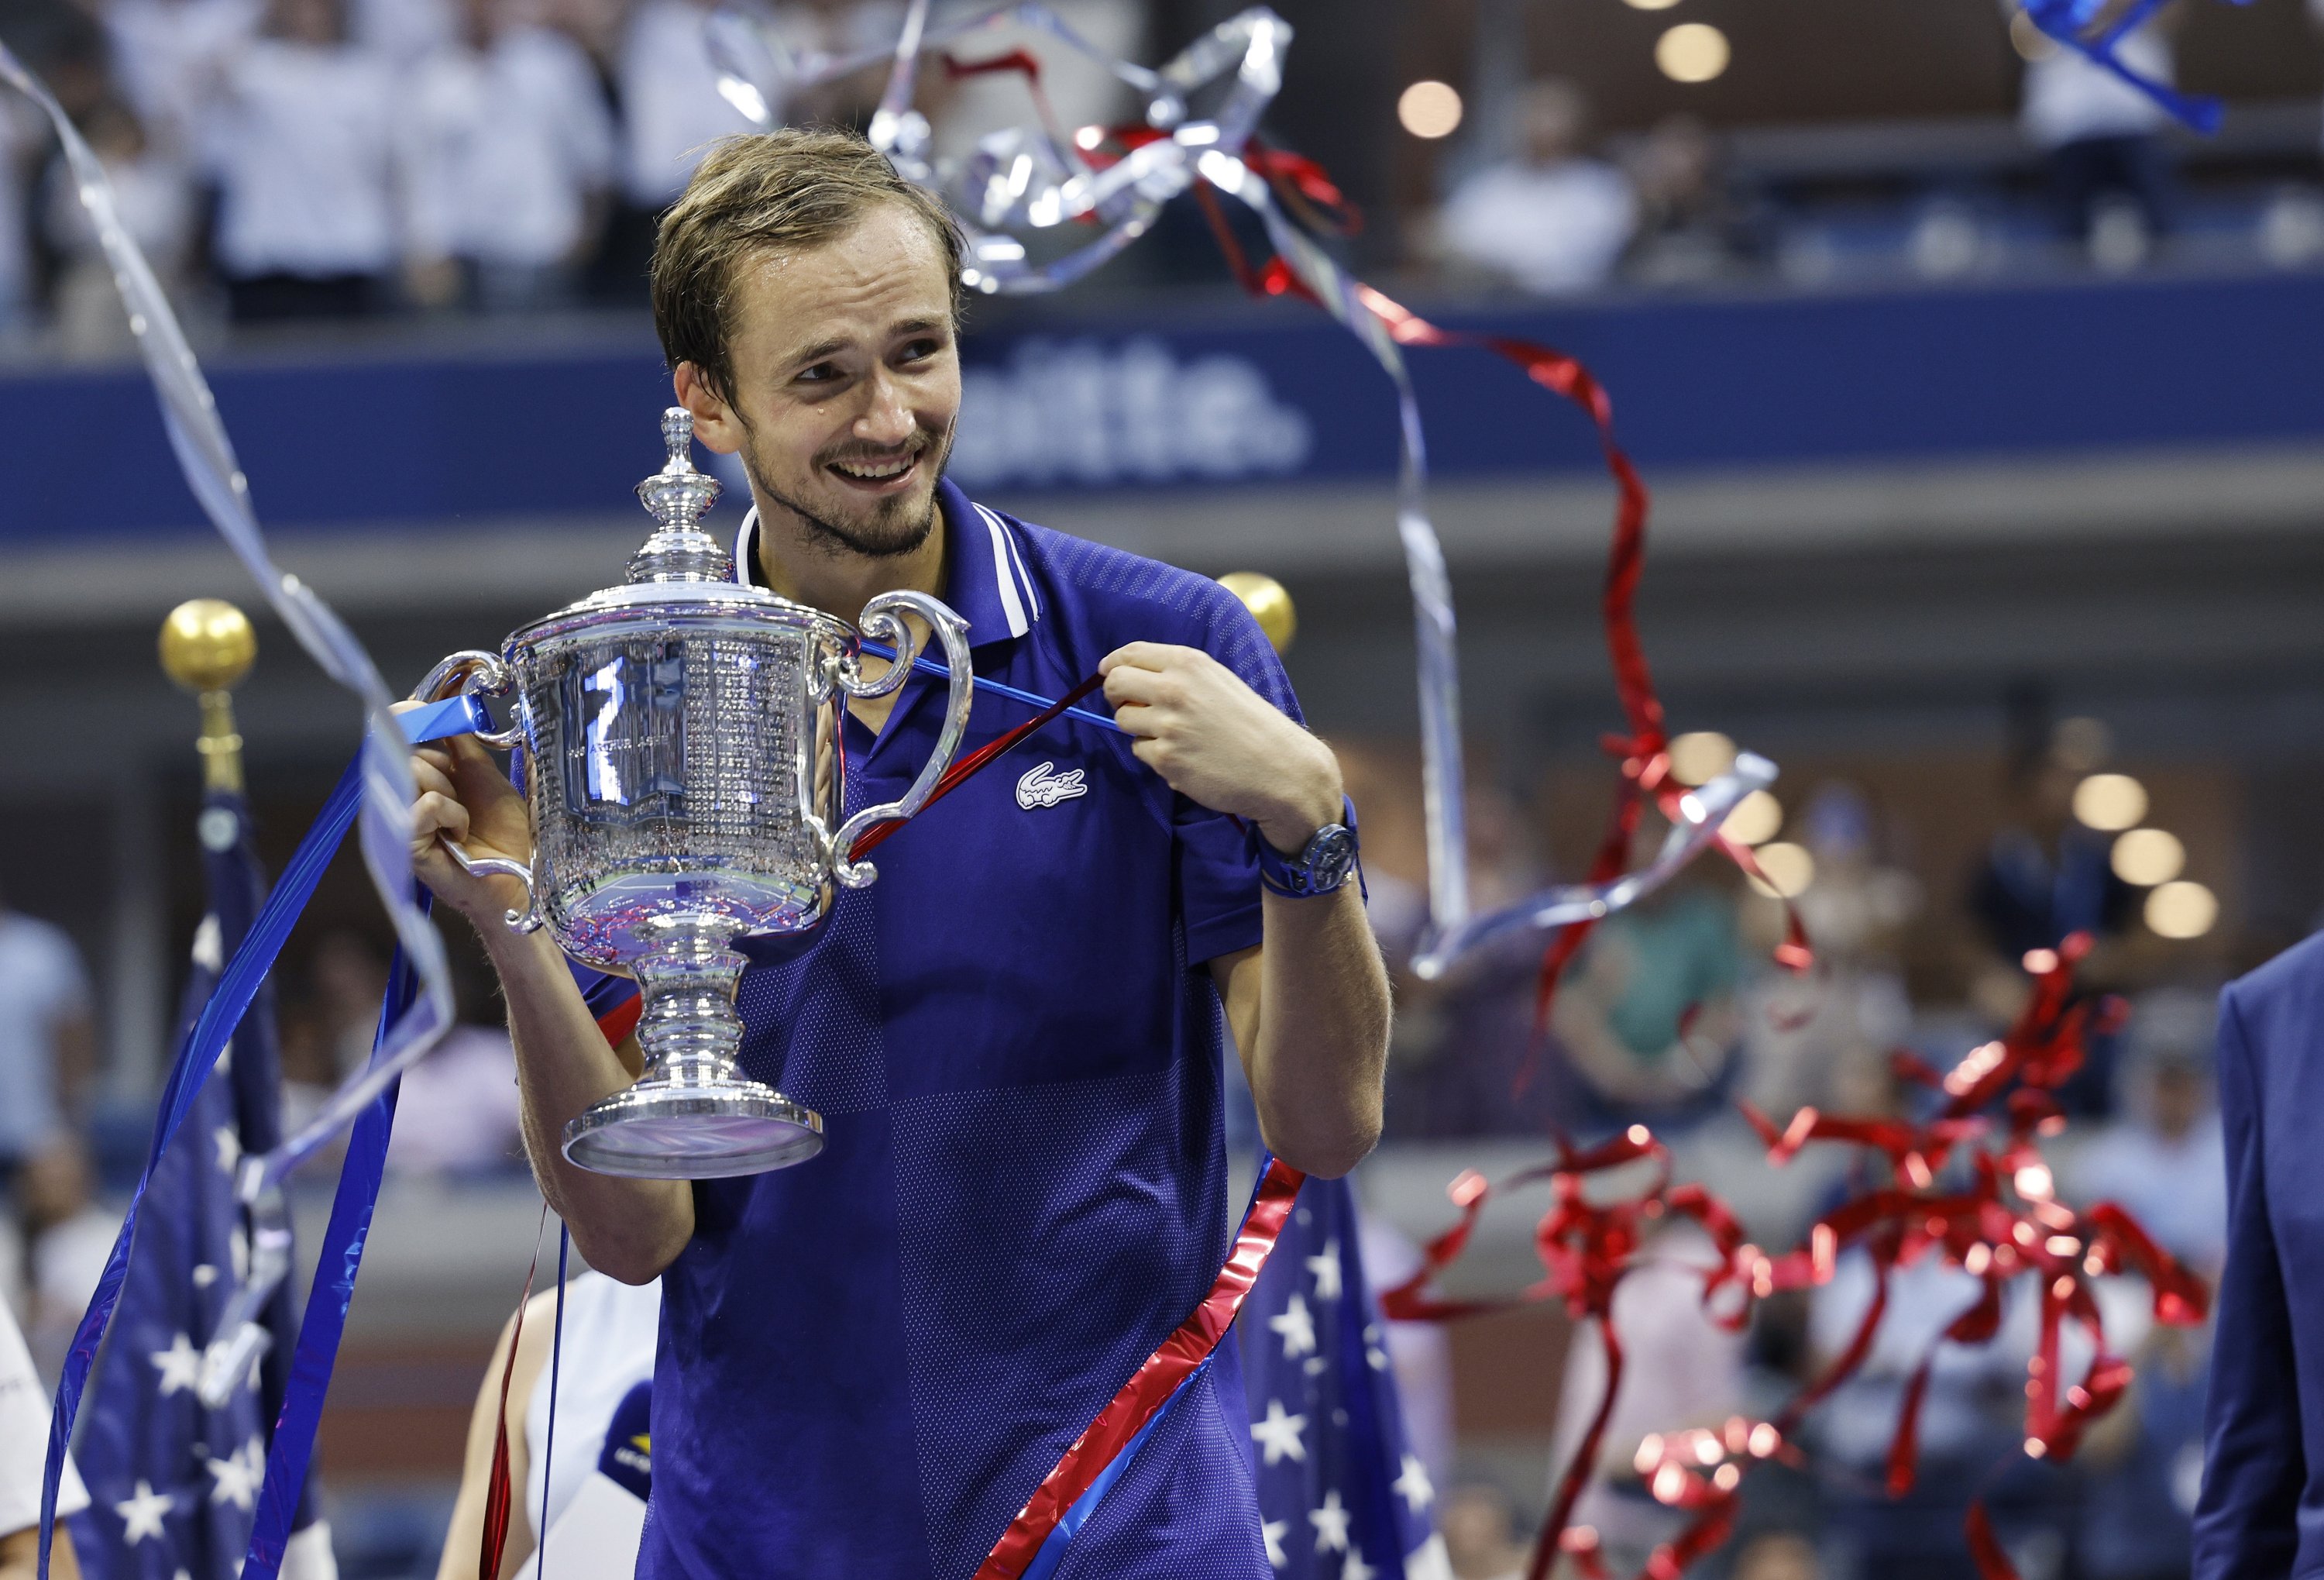 Who won US Open 2021 mens singles?